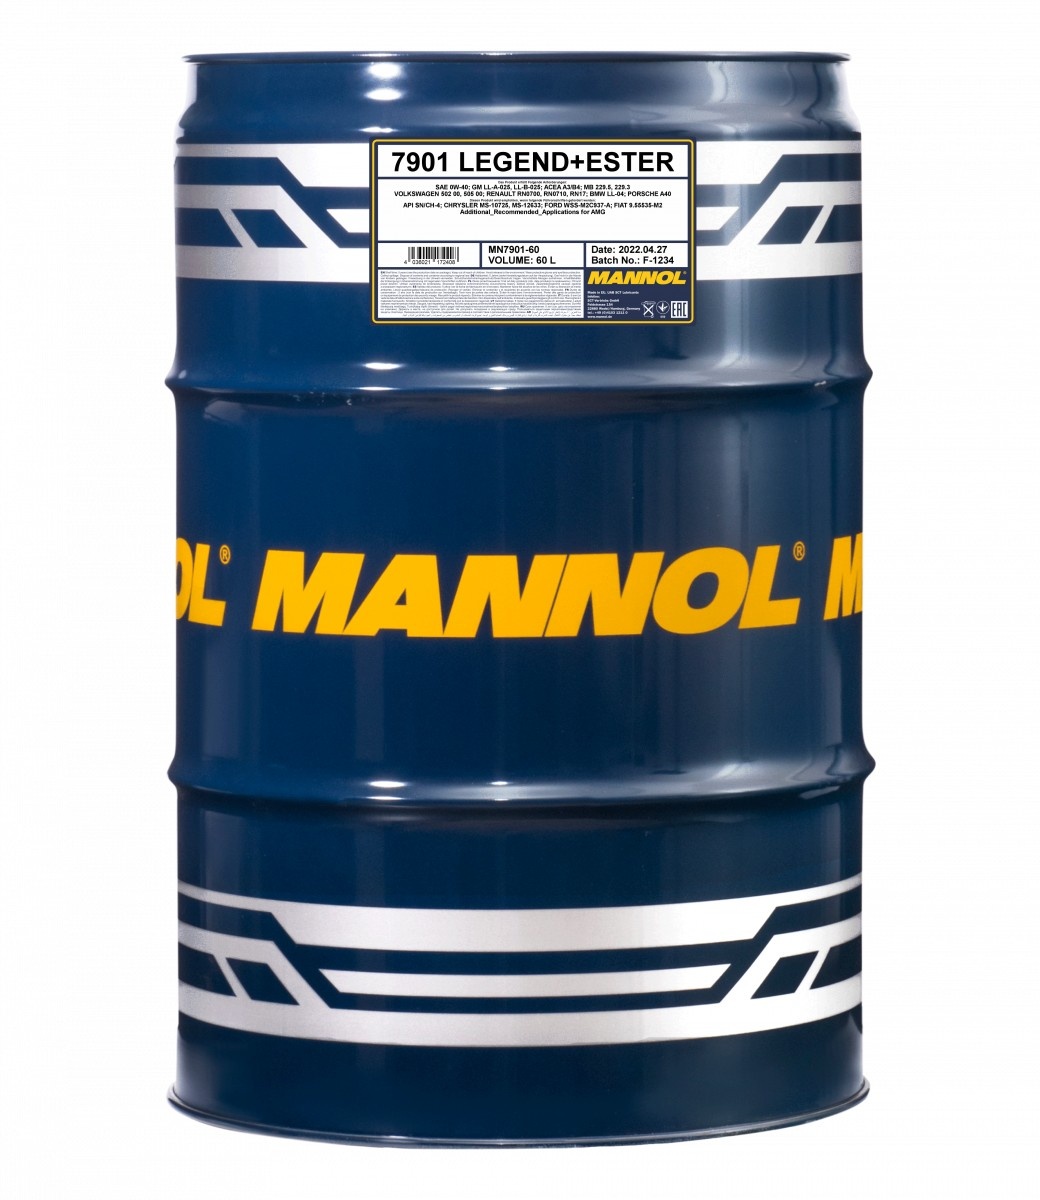 Ulei de motor Mannol Legend+Ester 0W-40 7901 60L